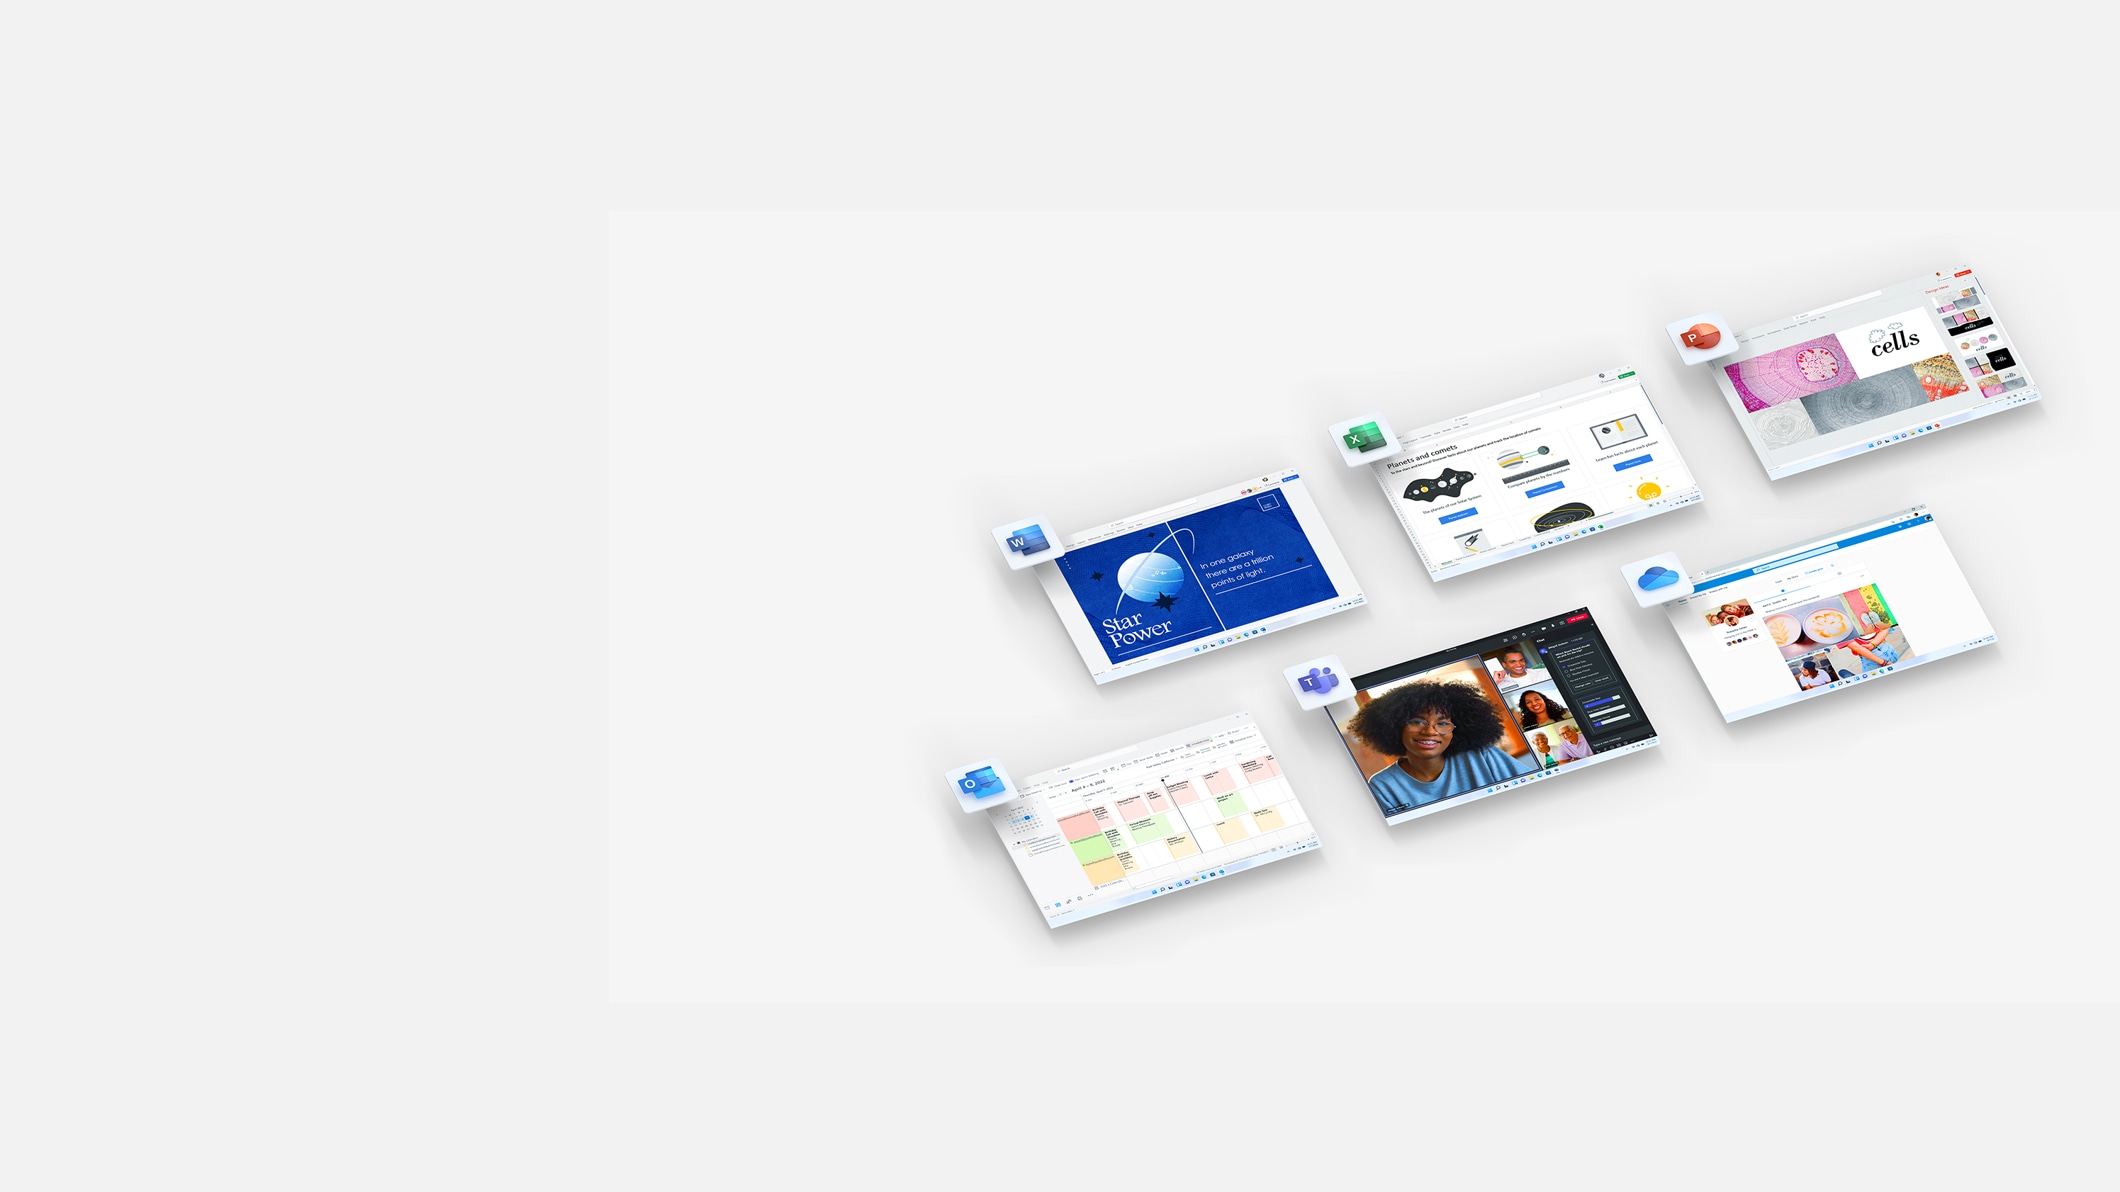 Telas mostrando o Microsoft OneDrive, Excel, Word, PowerPoint e Outlook.